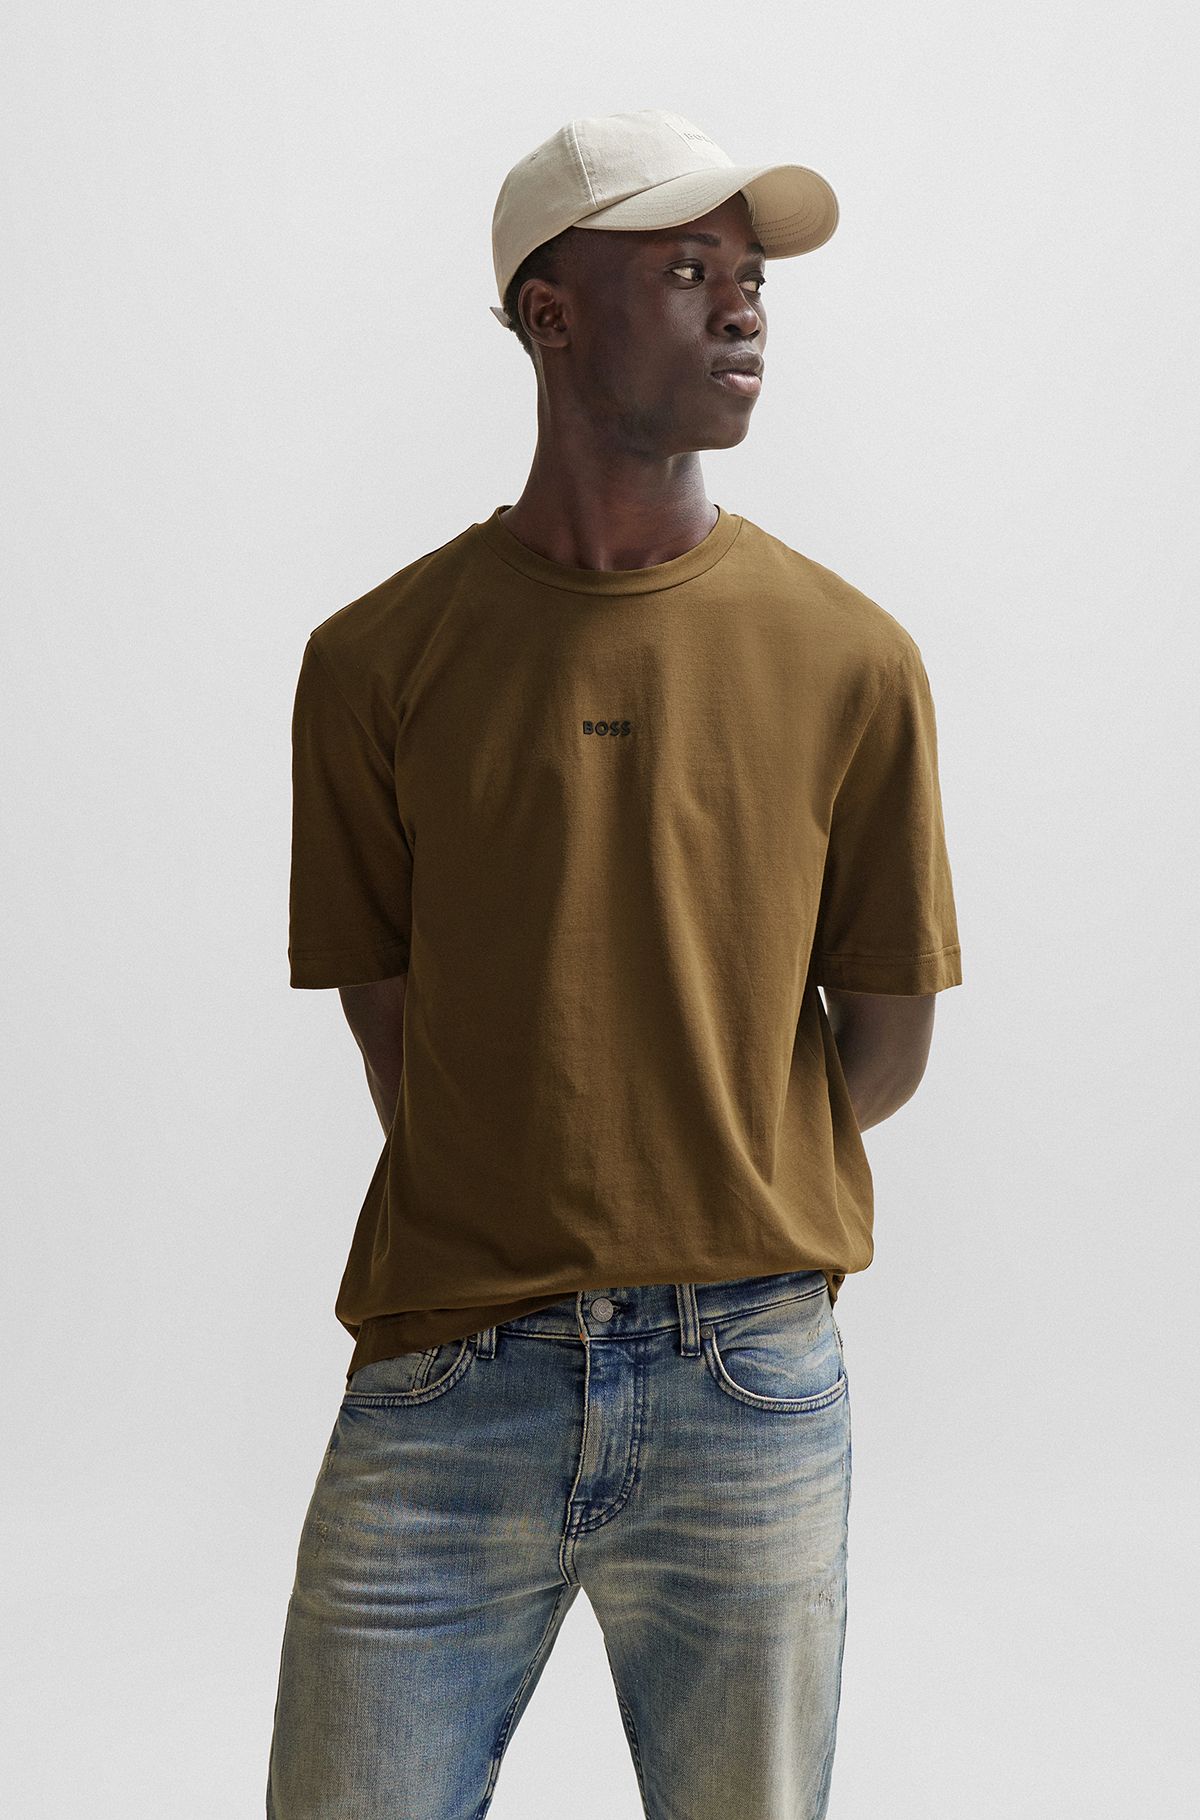 by T-Shirts Men Stylish | Green HUGO BOSS BOSS for Men